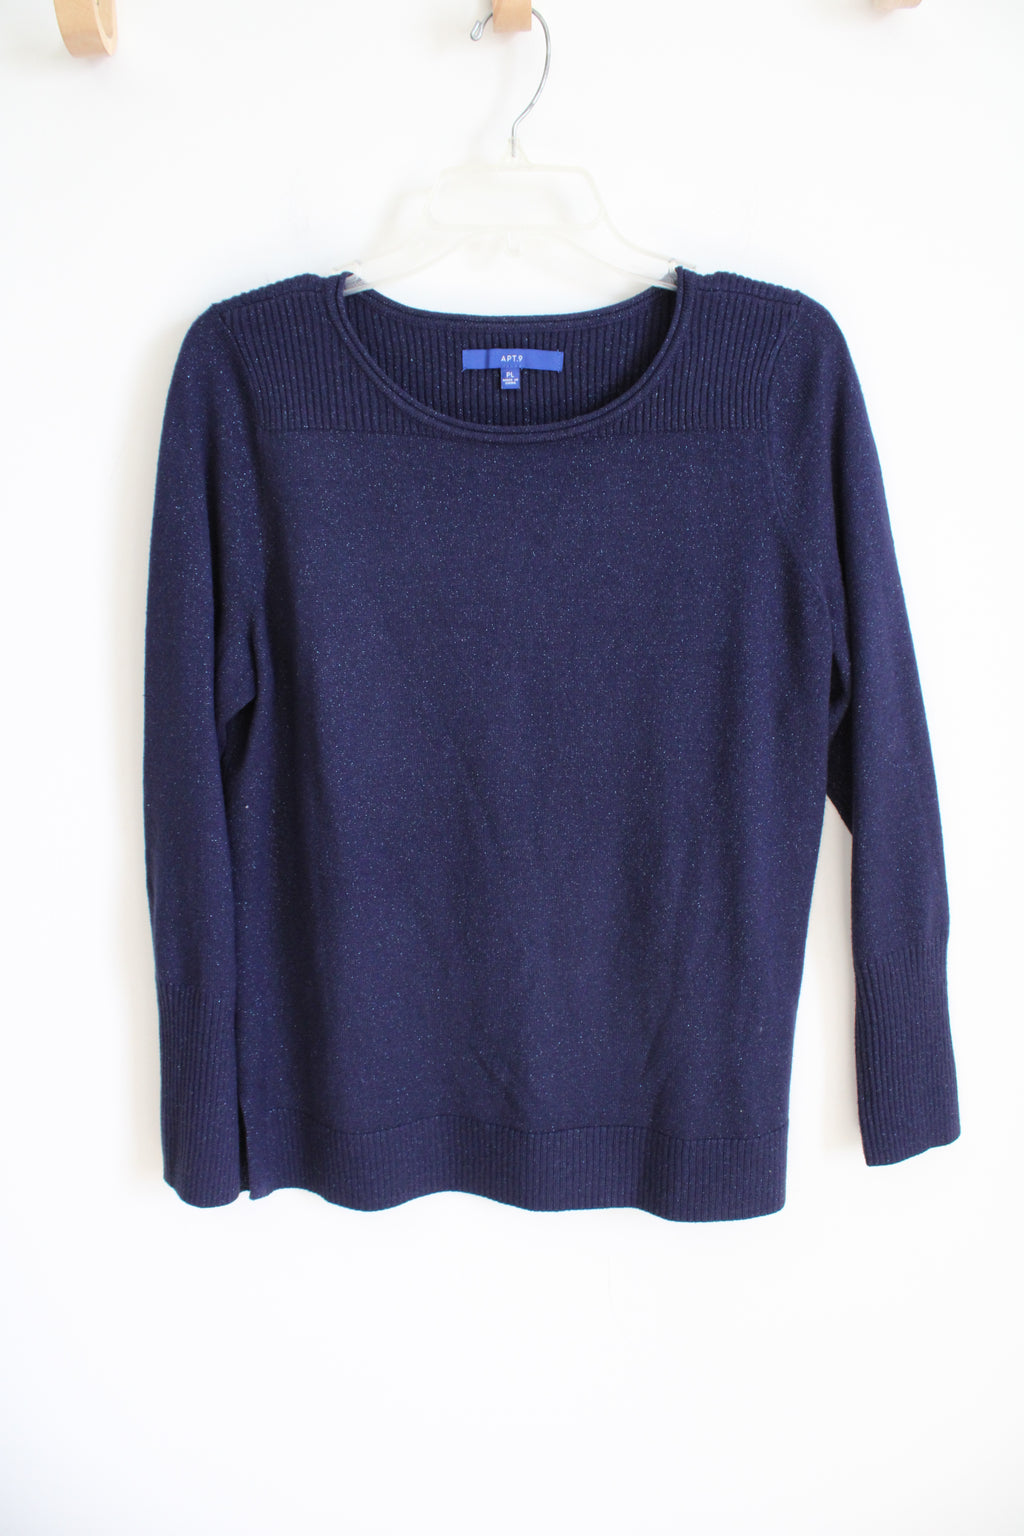 Apt. 9 Purple Shimmer Sweater | L Petite